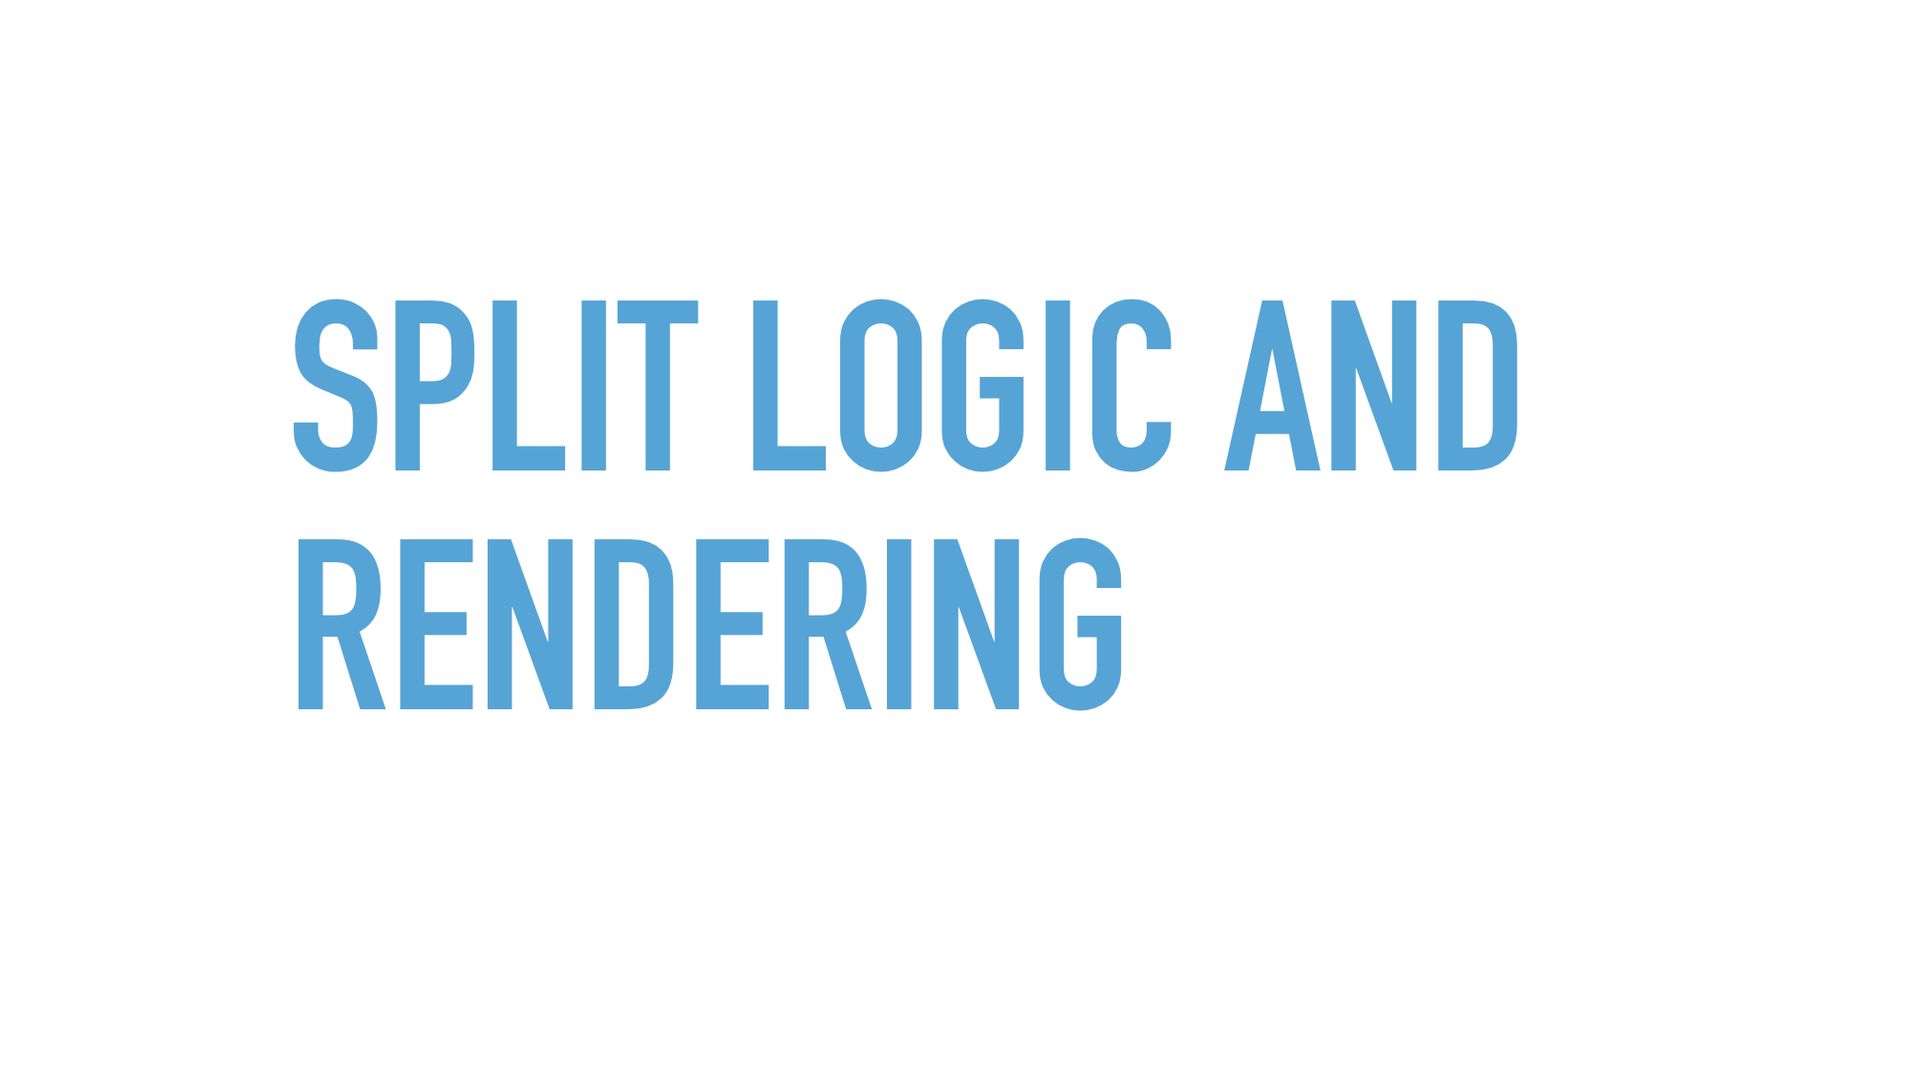 Slide text: Split logic and rendering